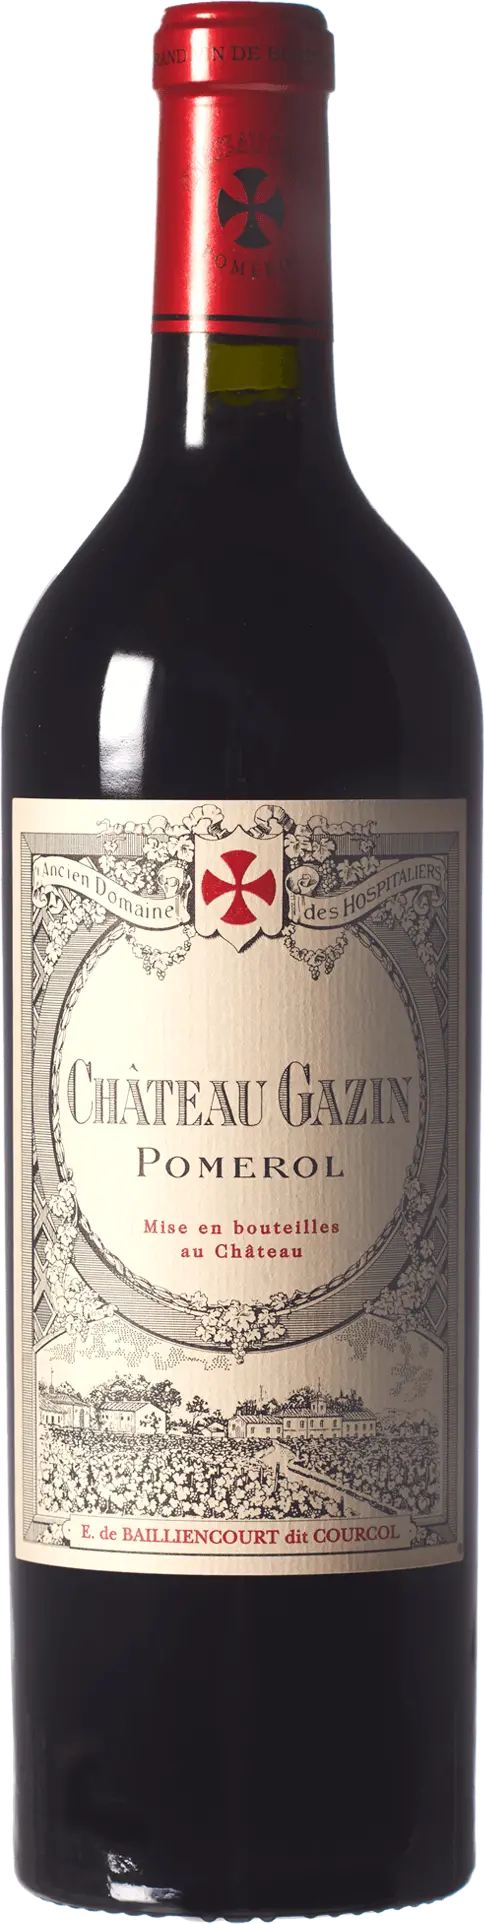 Château Gazin - Pomerol 2016